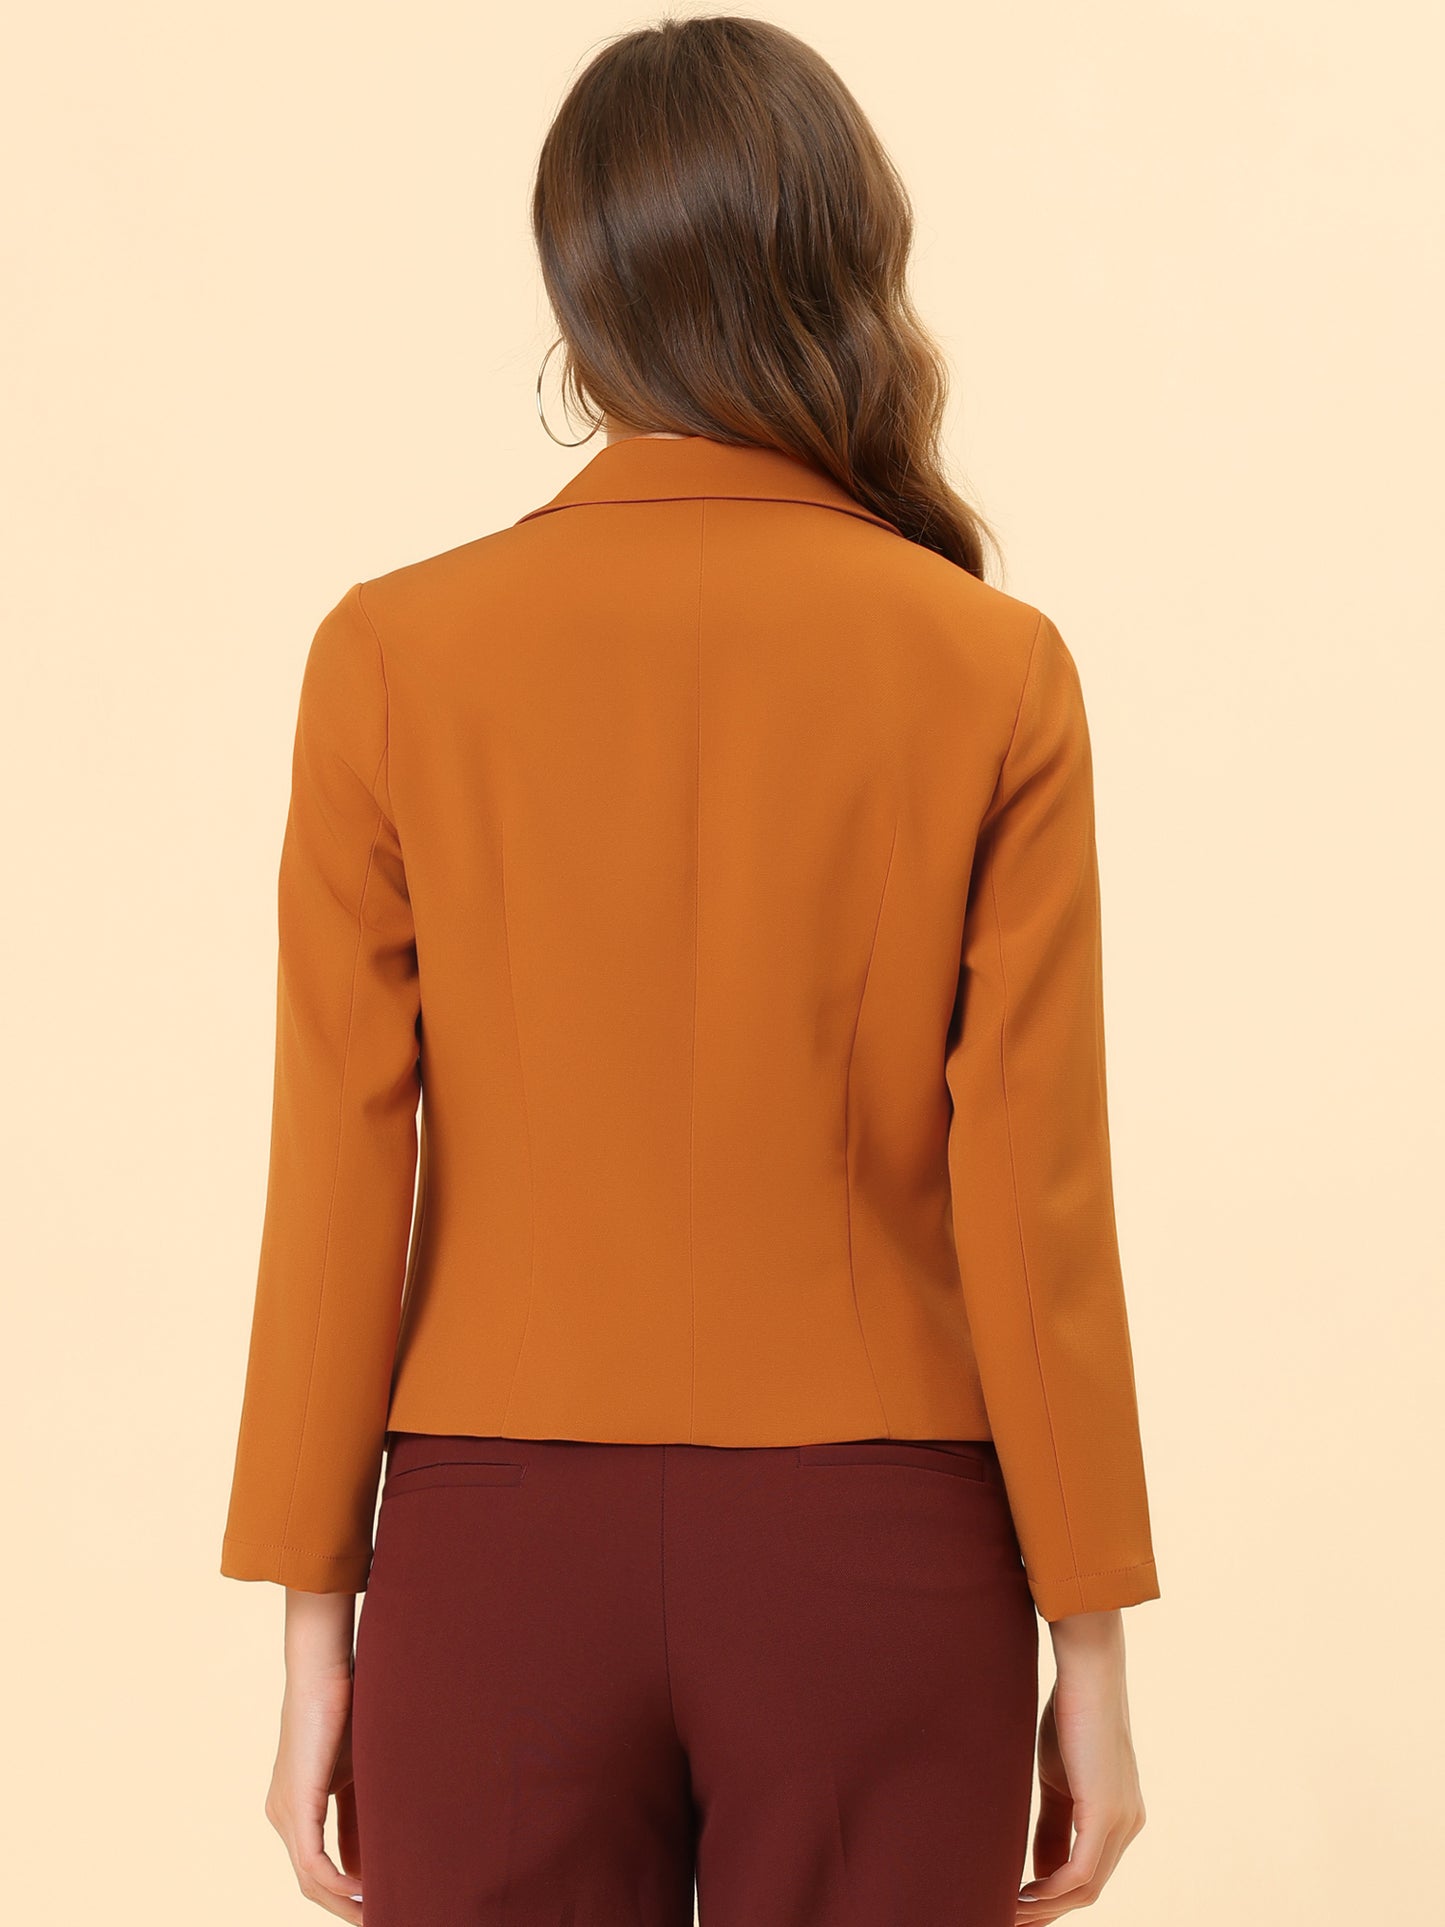 Allegra K Open Front Business Casual Workwear Crop Suit Blazer Jacket Dark Orange-Solid